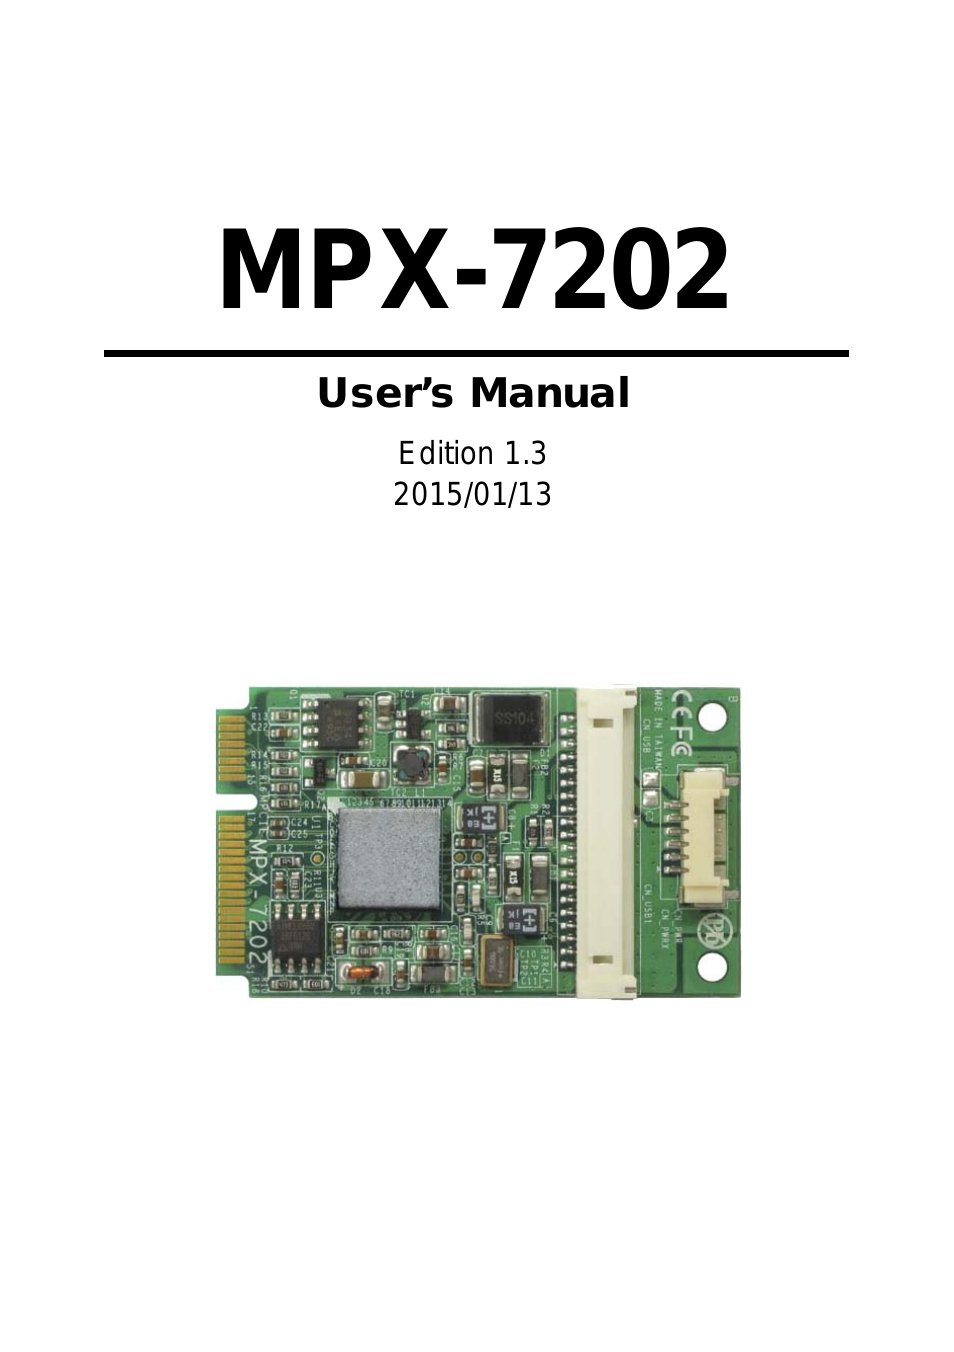 MPX-7202